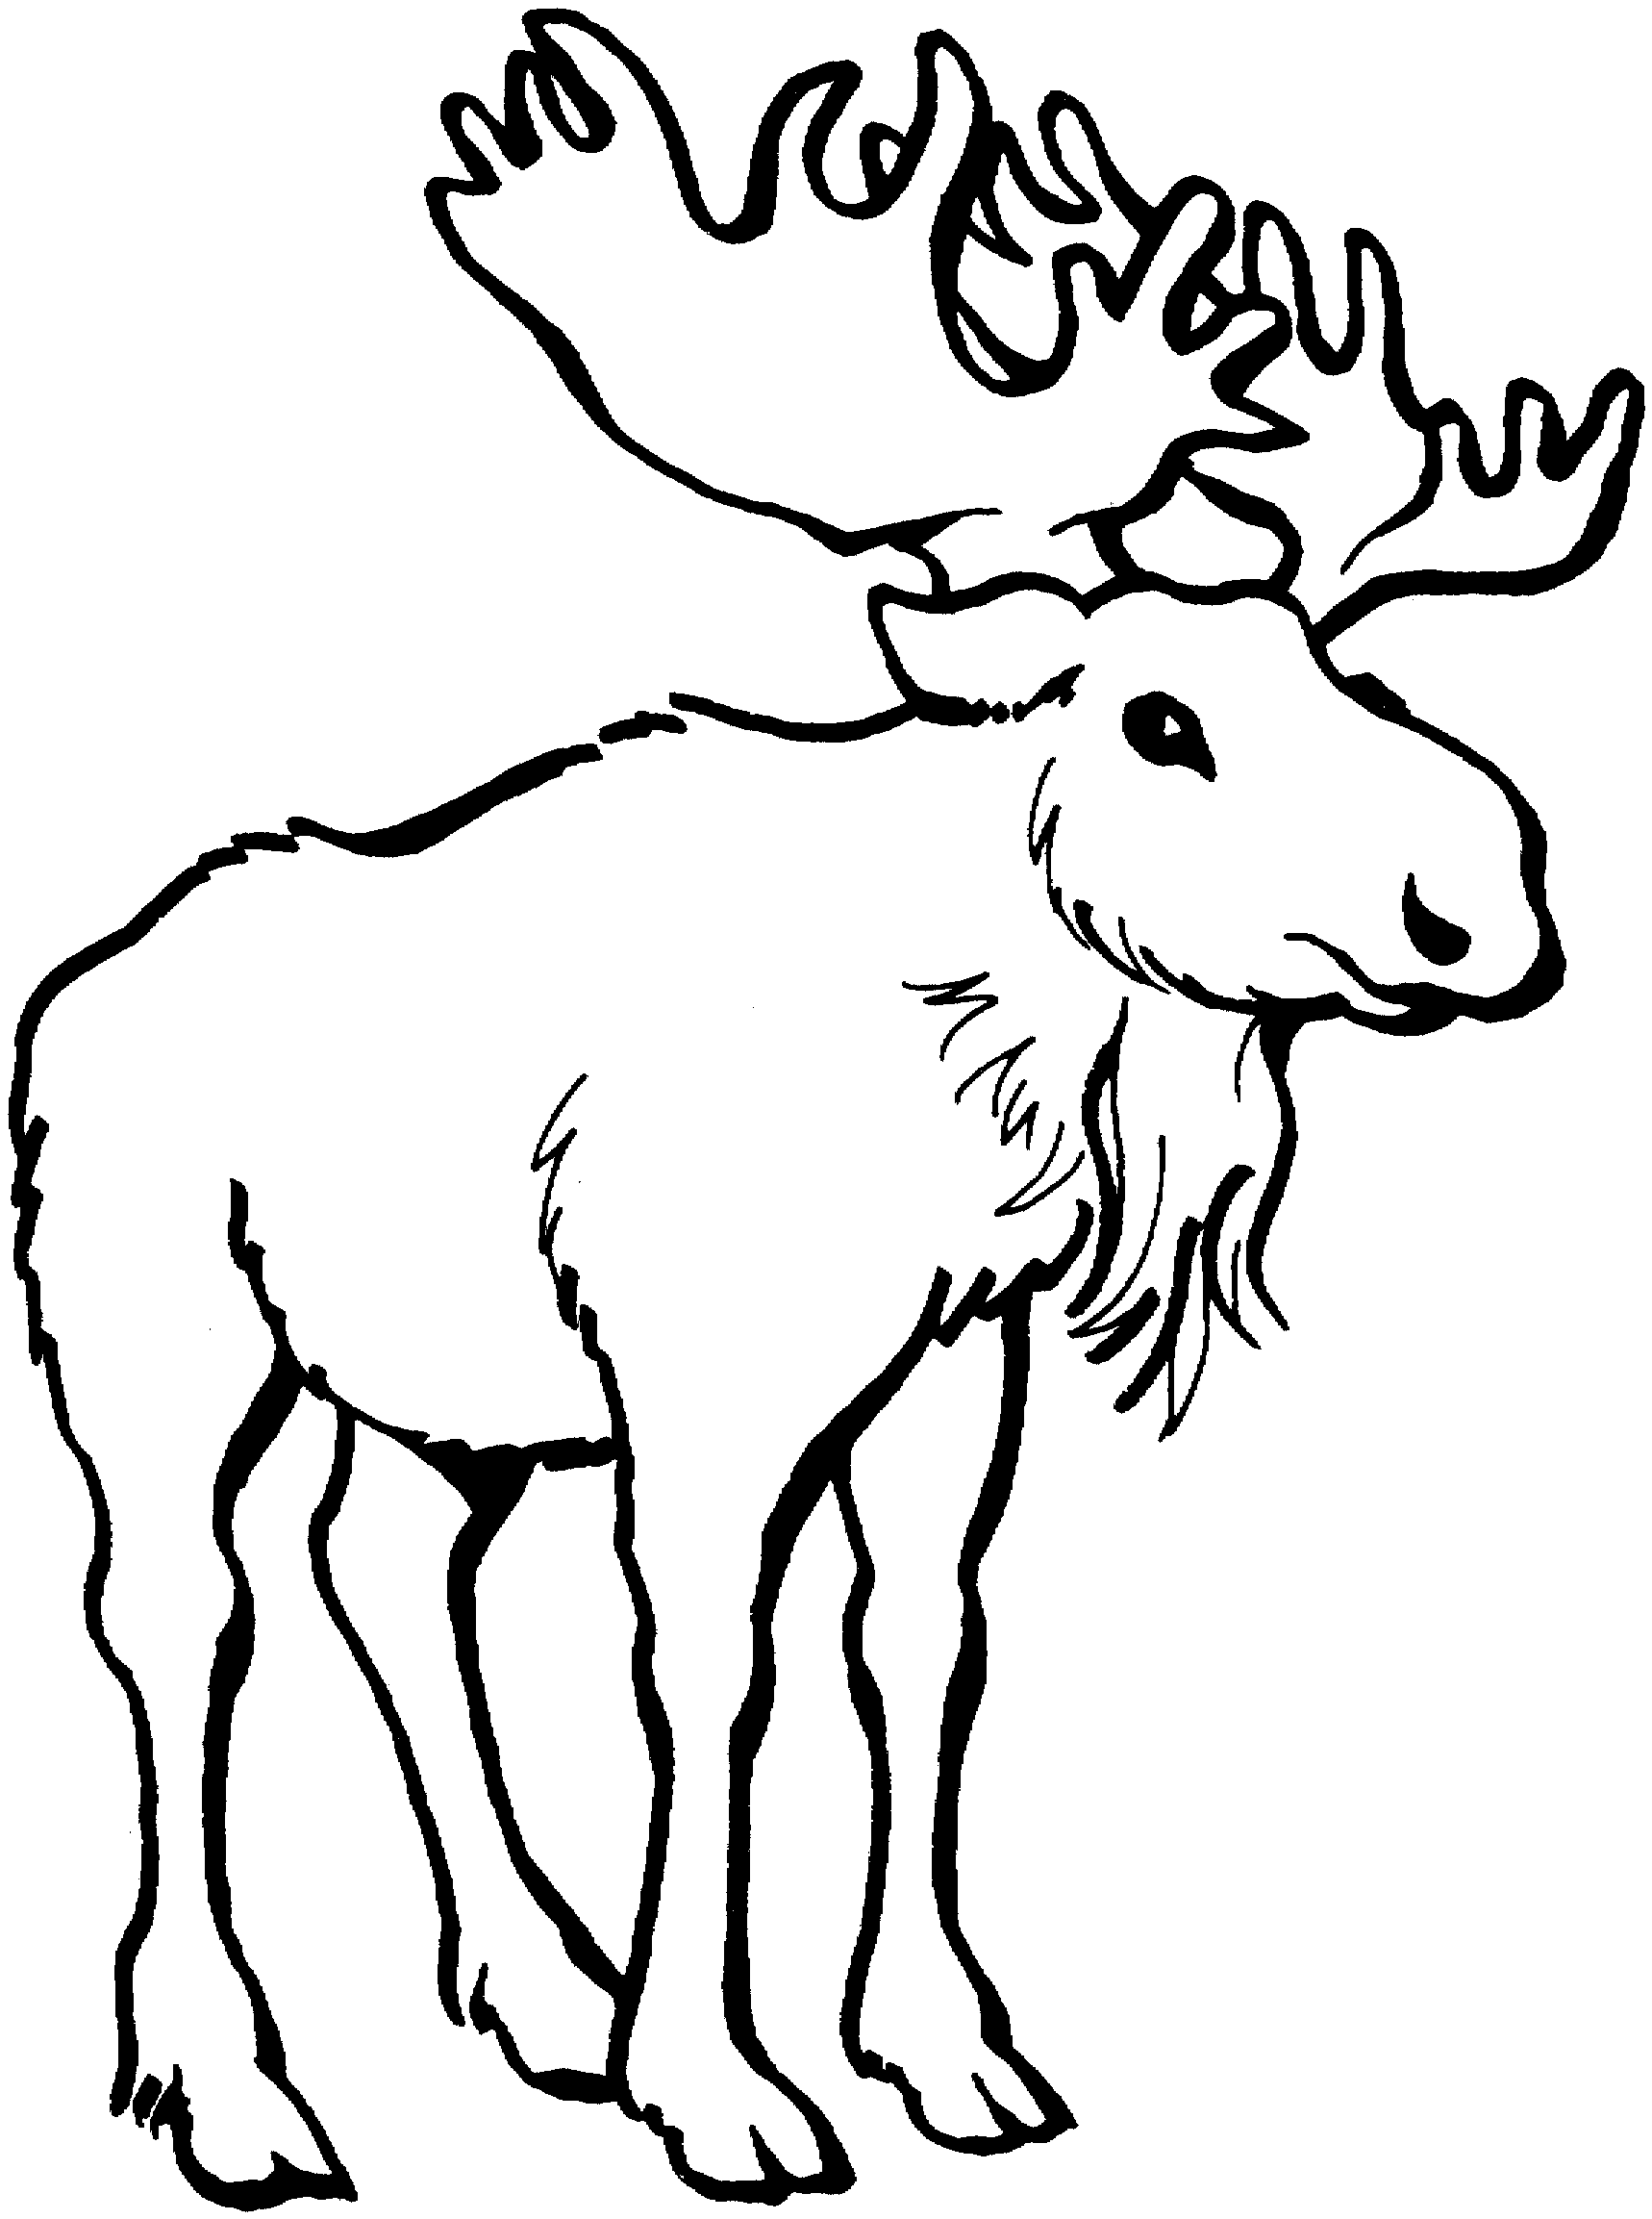 Moose clip art free wildlife clipart